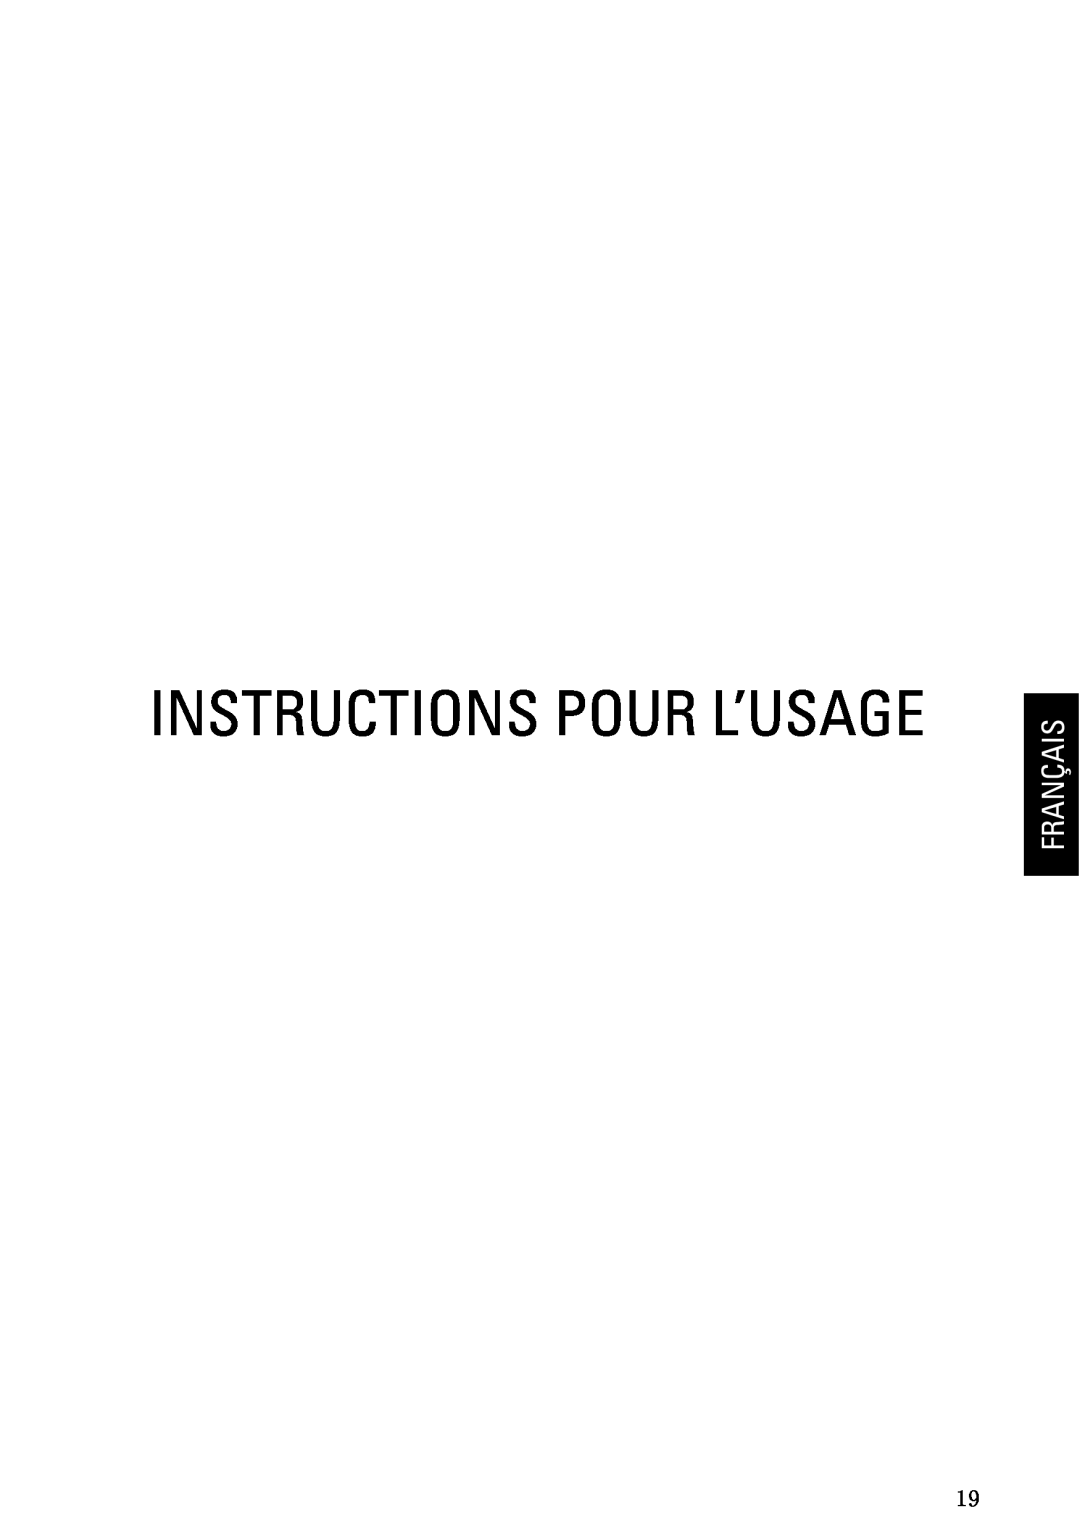 Sennheiser HMEC 200iii manual Instructions Pour L’Usage, Français 